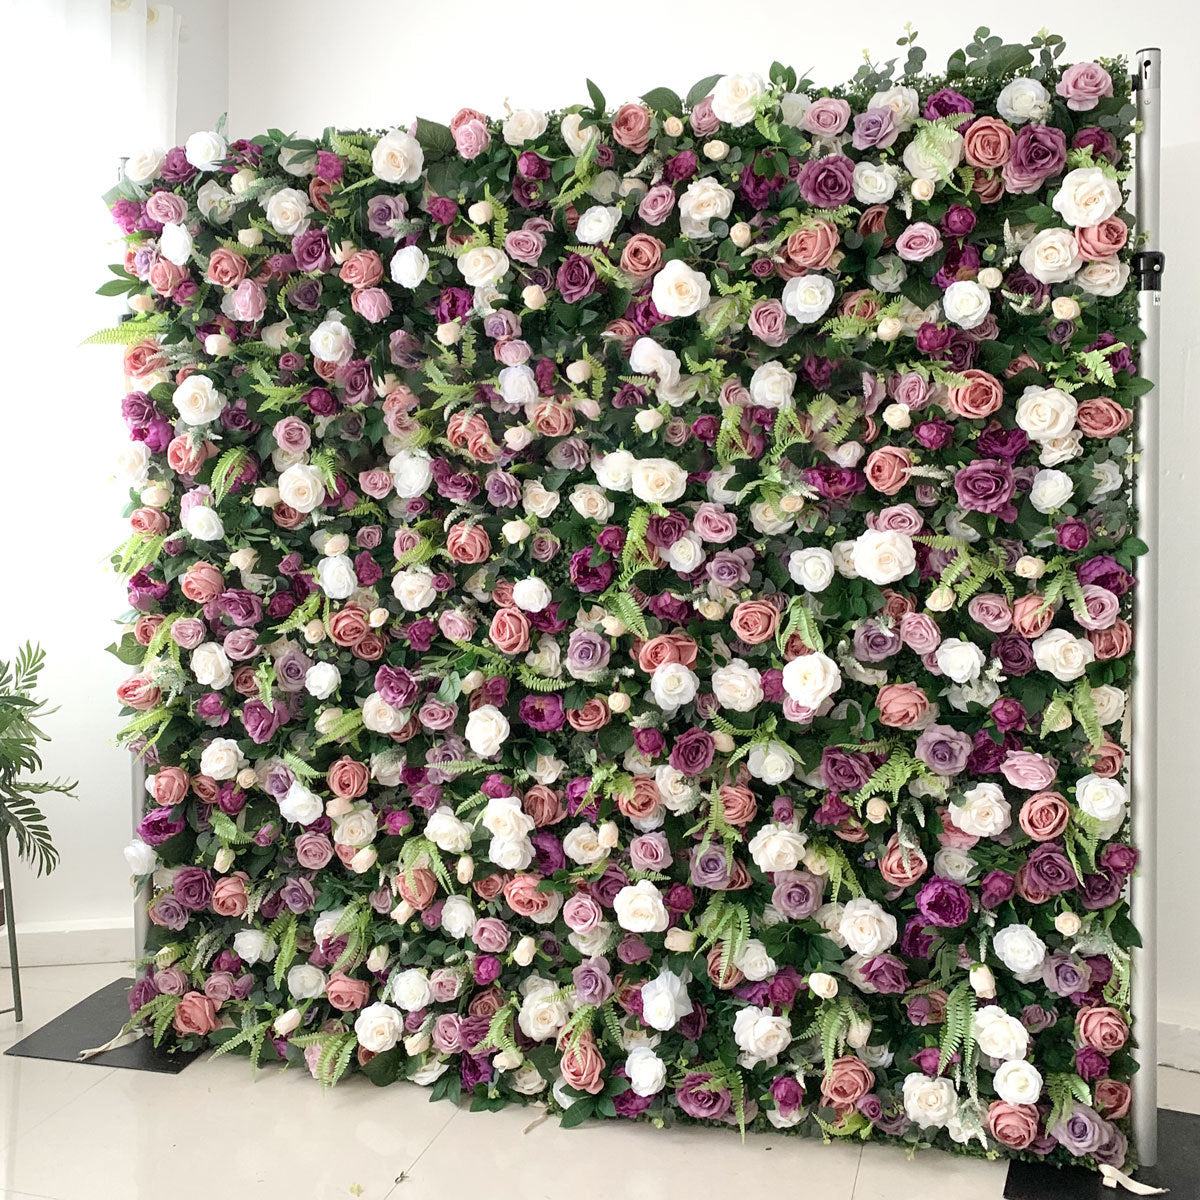 3D Artificial Flower Wall Arrangement Wedding Party Birthday Backdrop Decor HQ1154